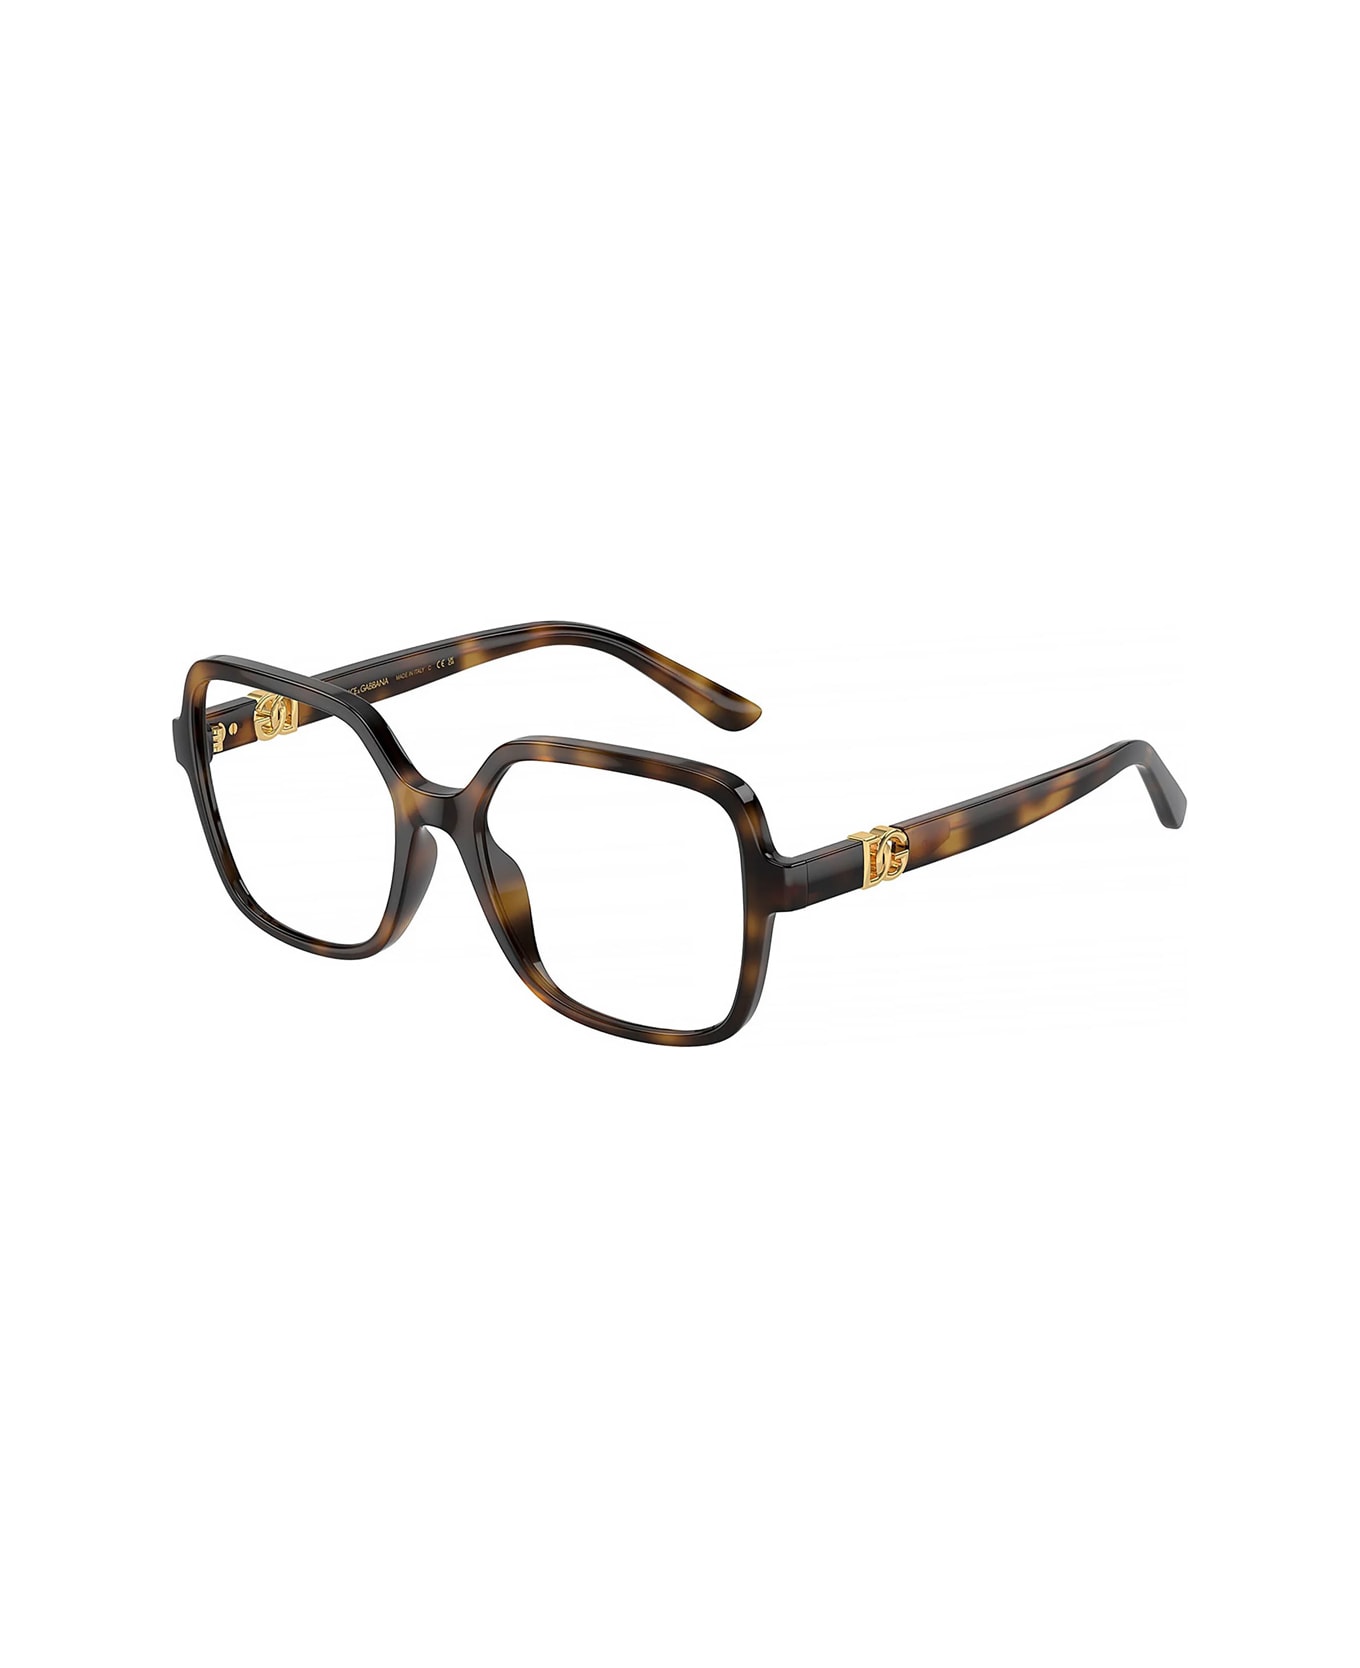 Dolce & Gabbana Eyewear Dg5105u 502 Glasses - Marrone アイウェア